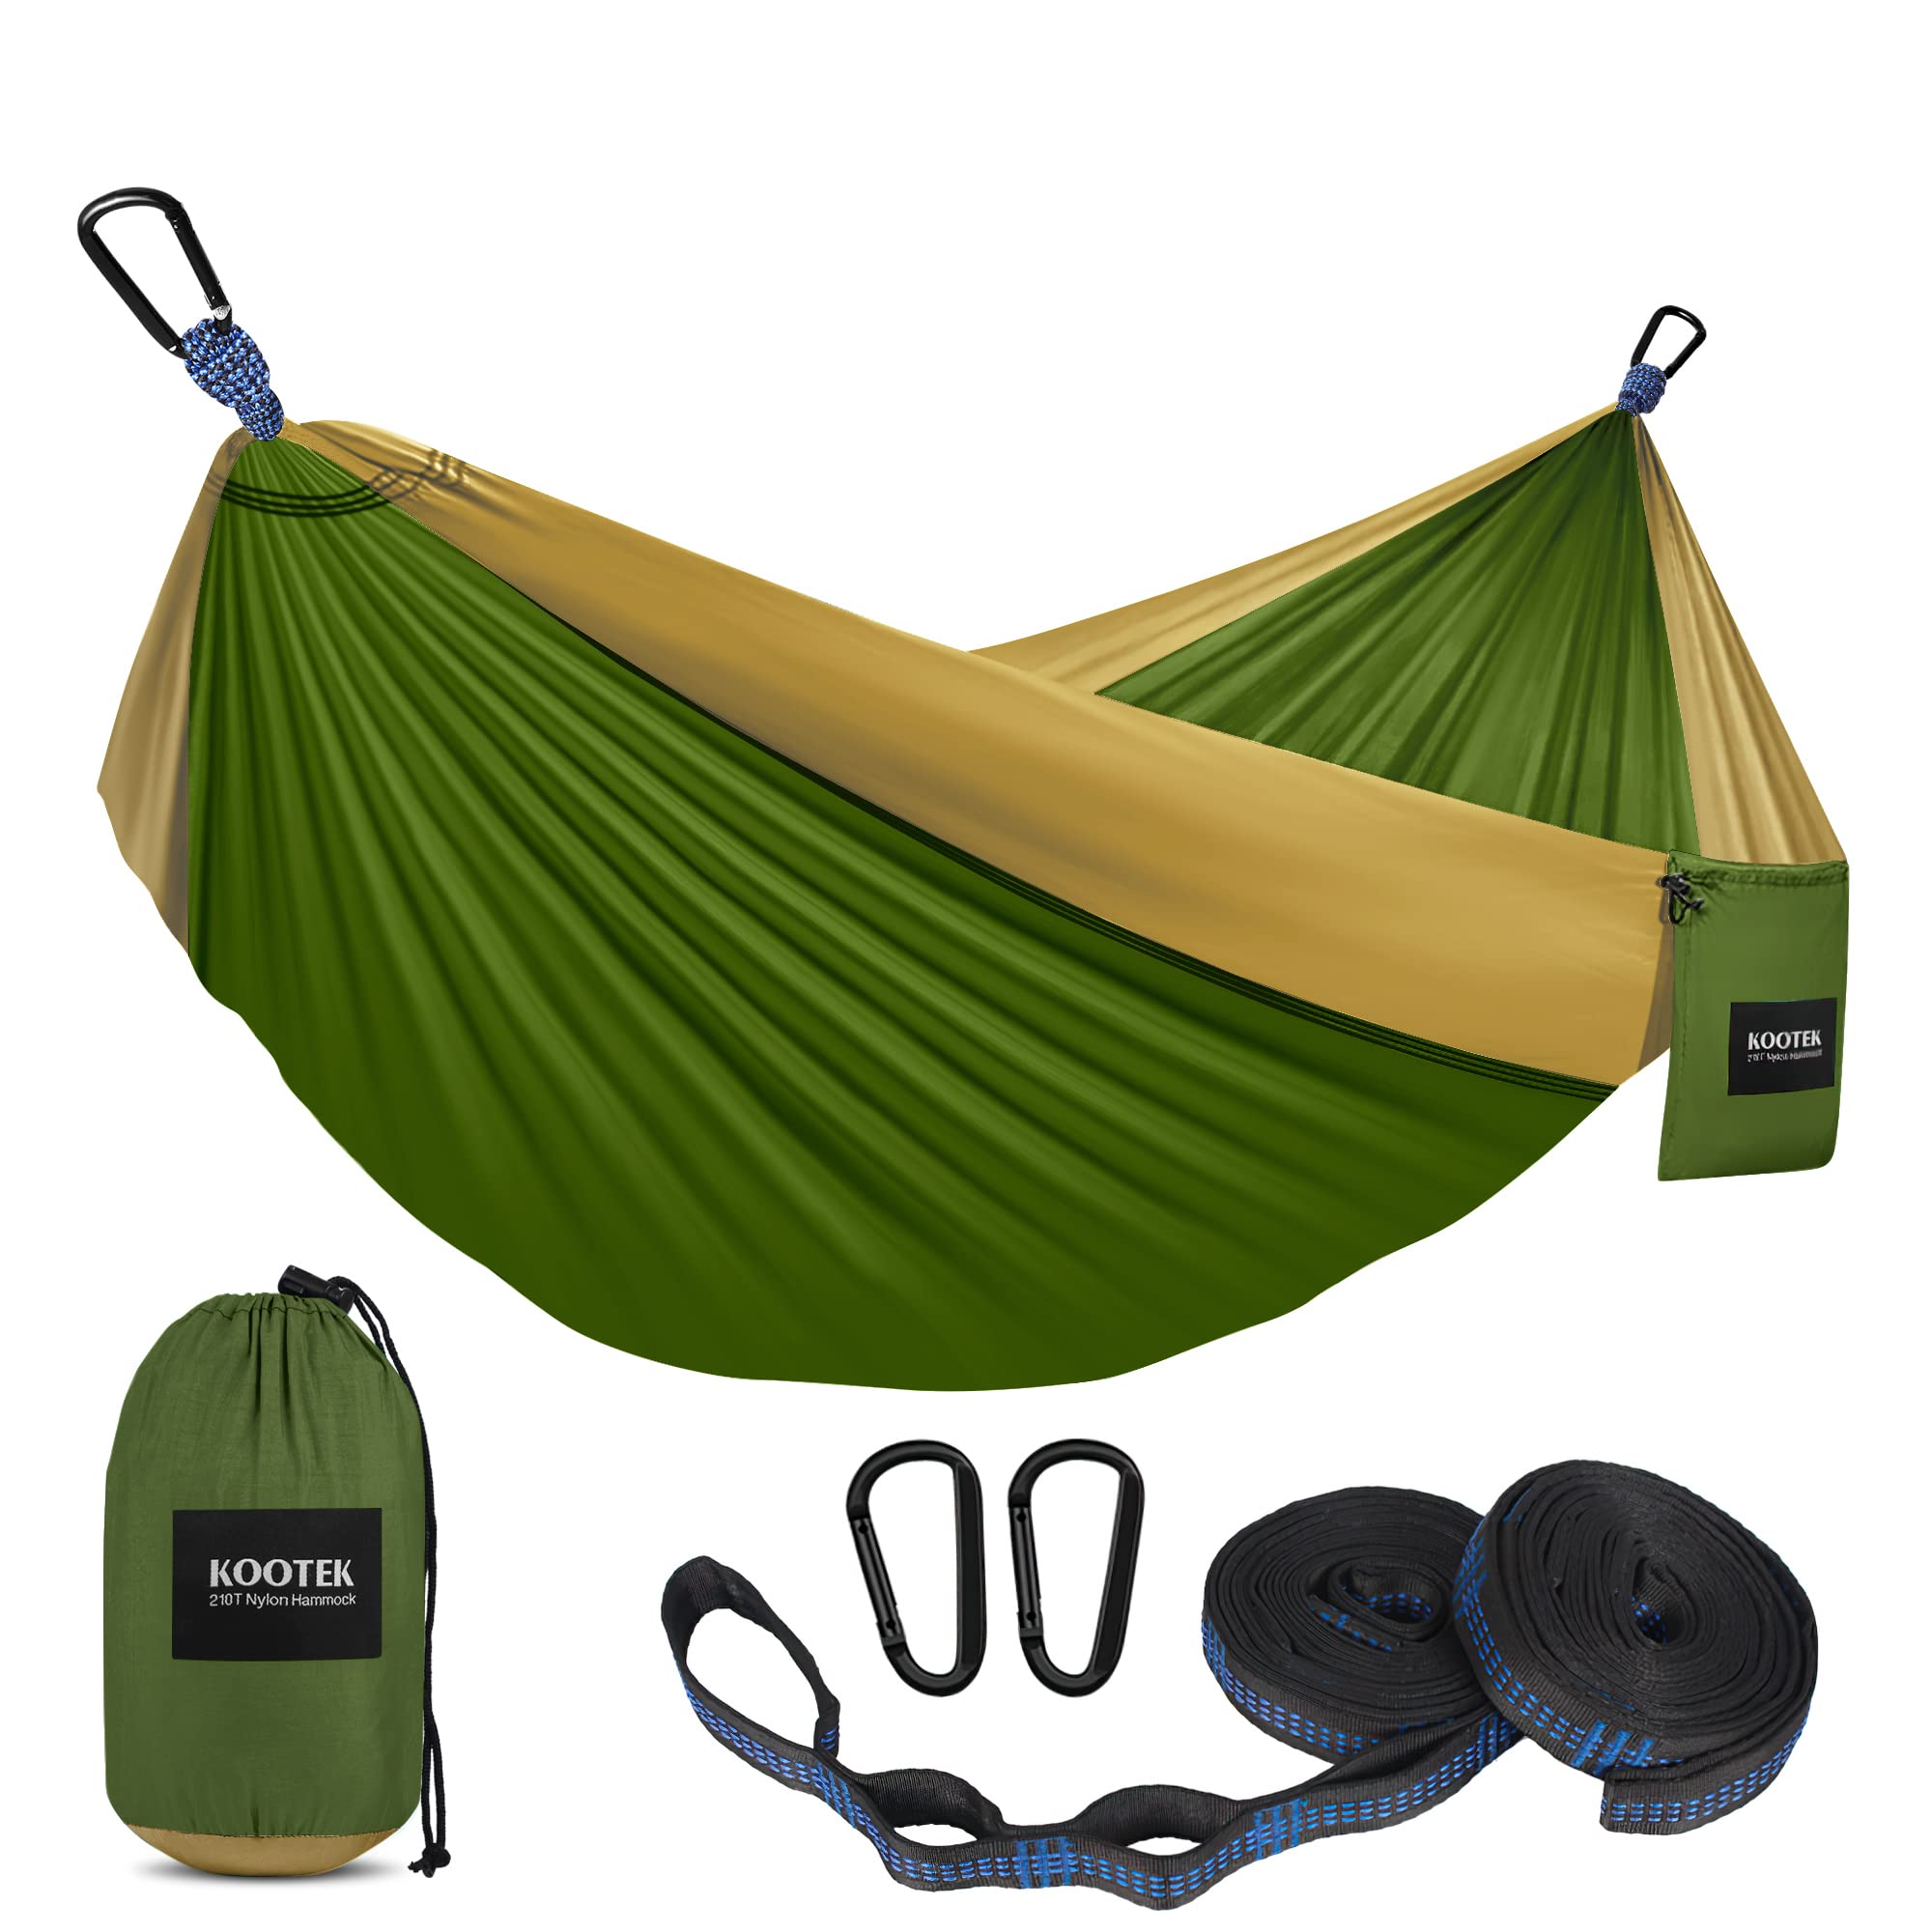 Kootek Camping Hammock Double Portable Hammocks with 2 Tree Straps, Lightweight Nylon Parachute Hammocks for Backpacking, Travel, Beach, Backyard, Patio, Hiking